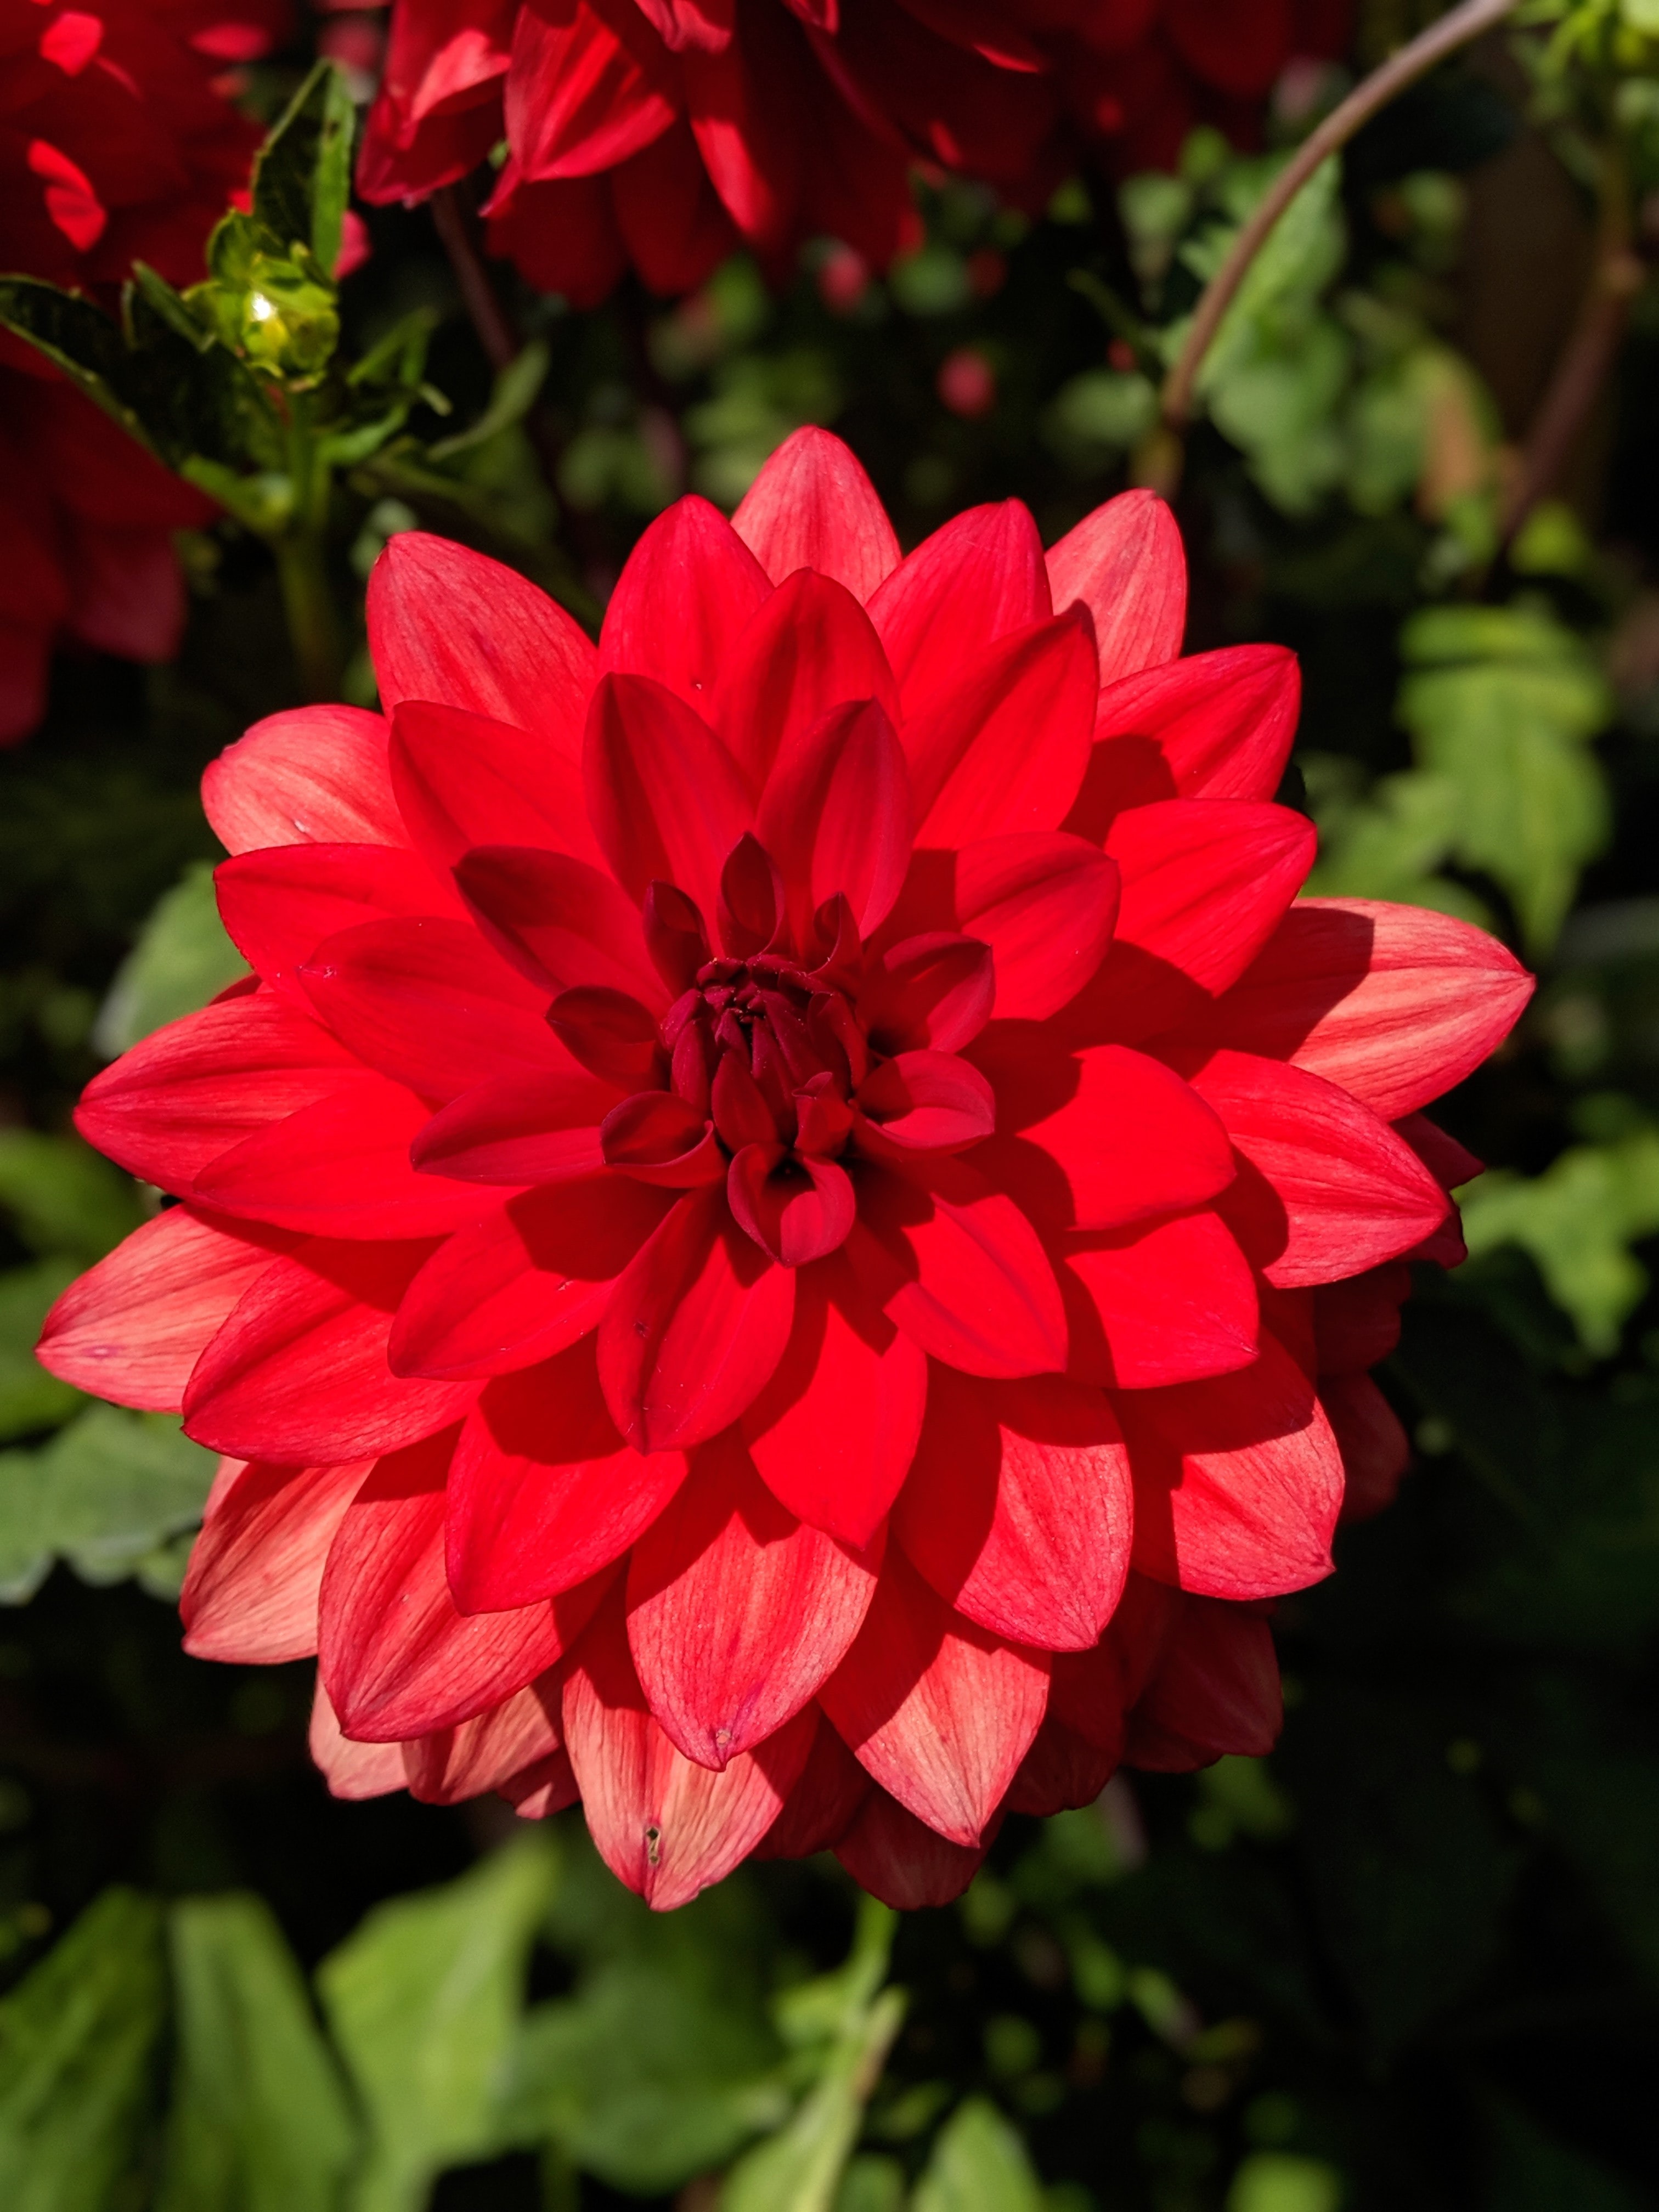 red flower close-up shot